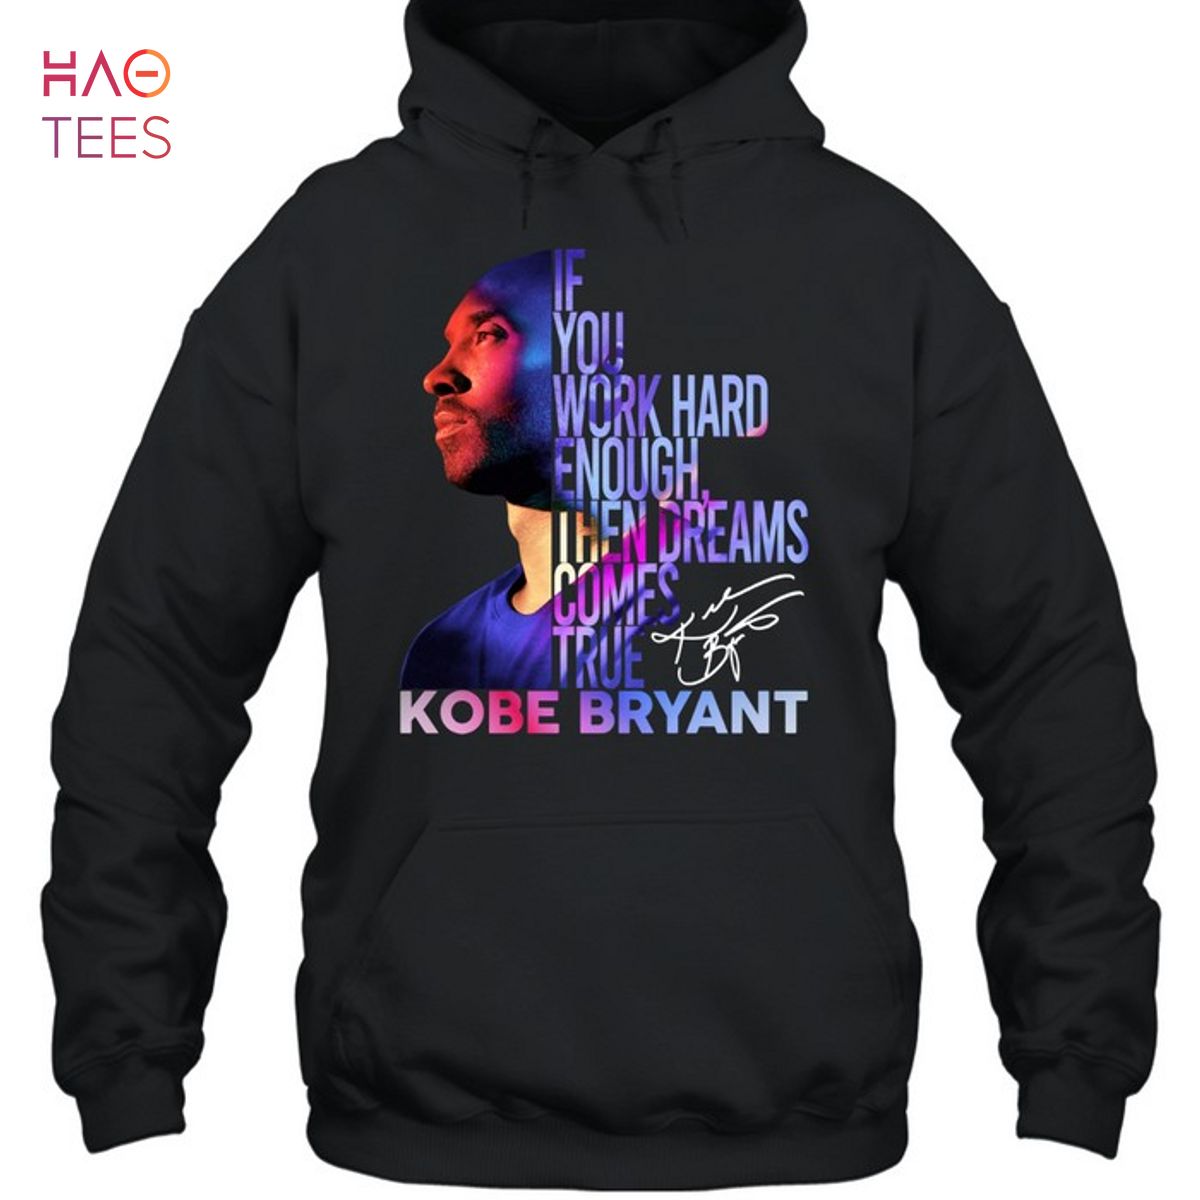 If You Work Hard Enough Then Dreams Come True Kobe Bryant T-Shirt